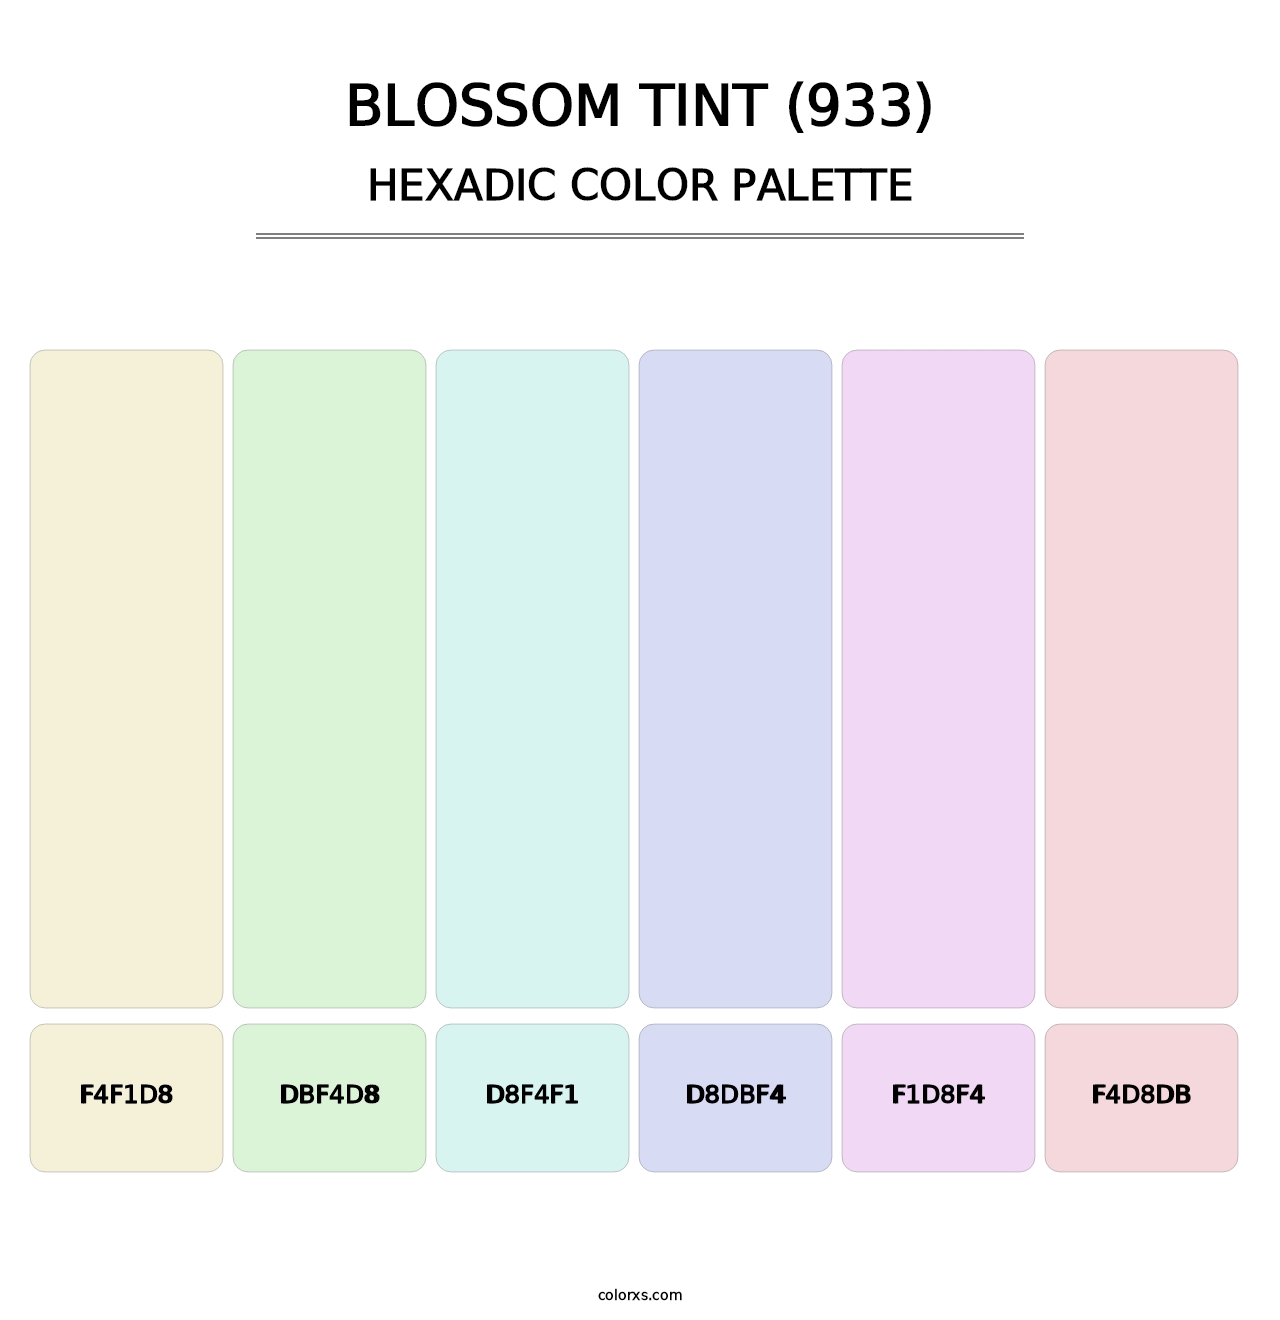 Blossom Tint (933) - Hexadic Color Palette